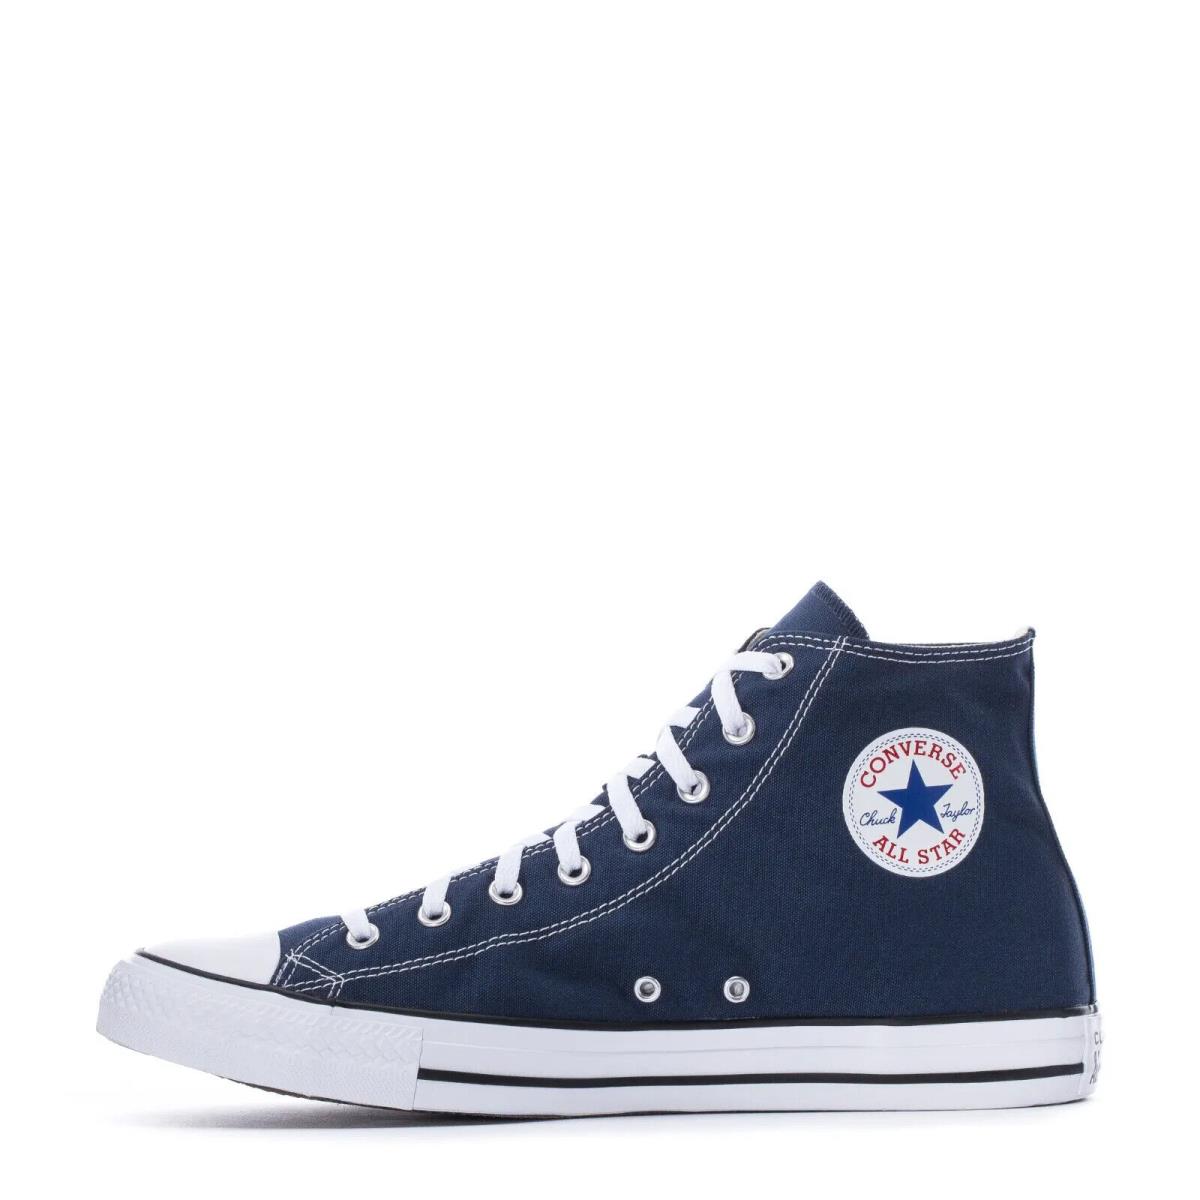 Converse Chuck Taylor HI Core Blue White Black HI Top Casual Athletic Sneakers